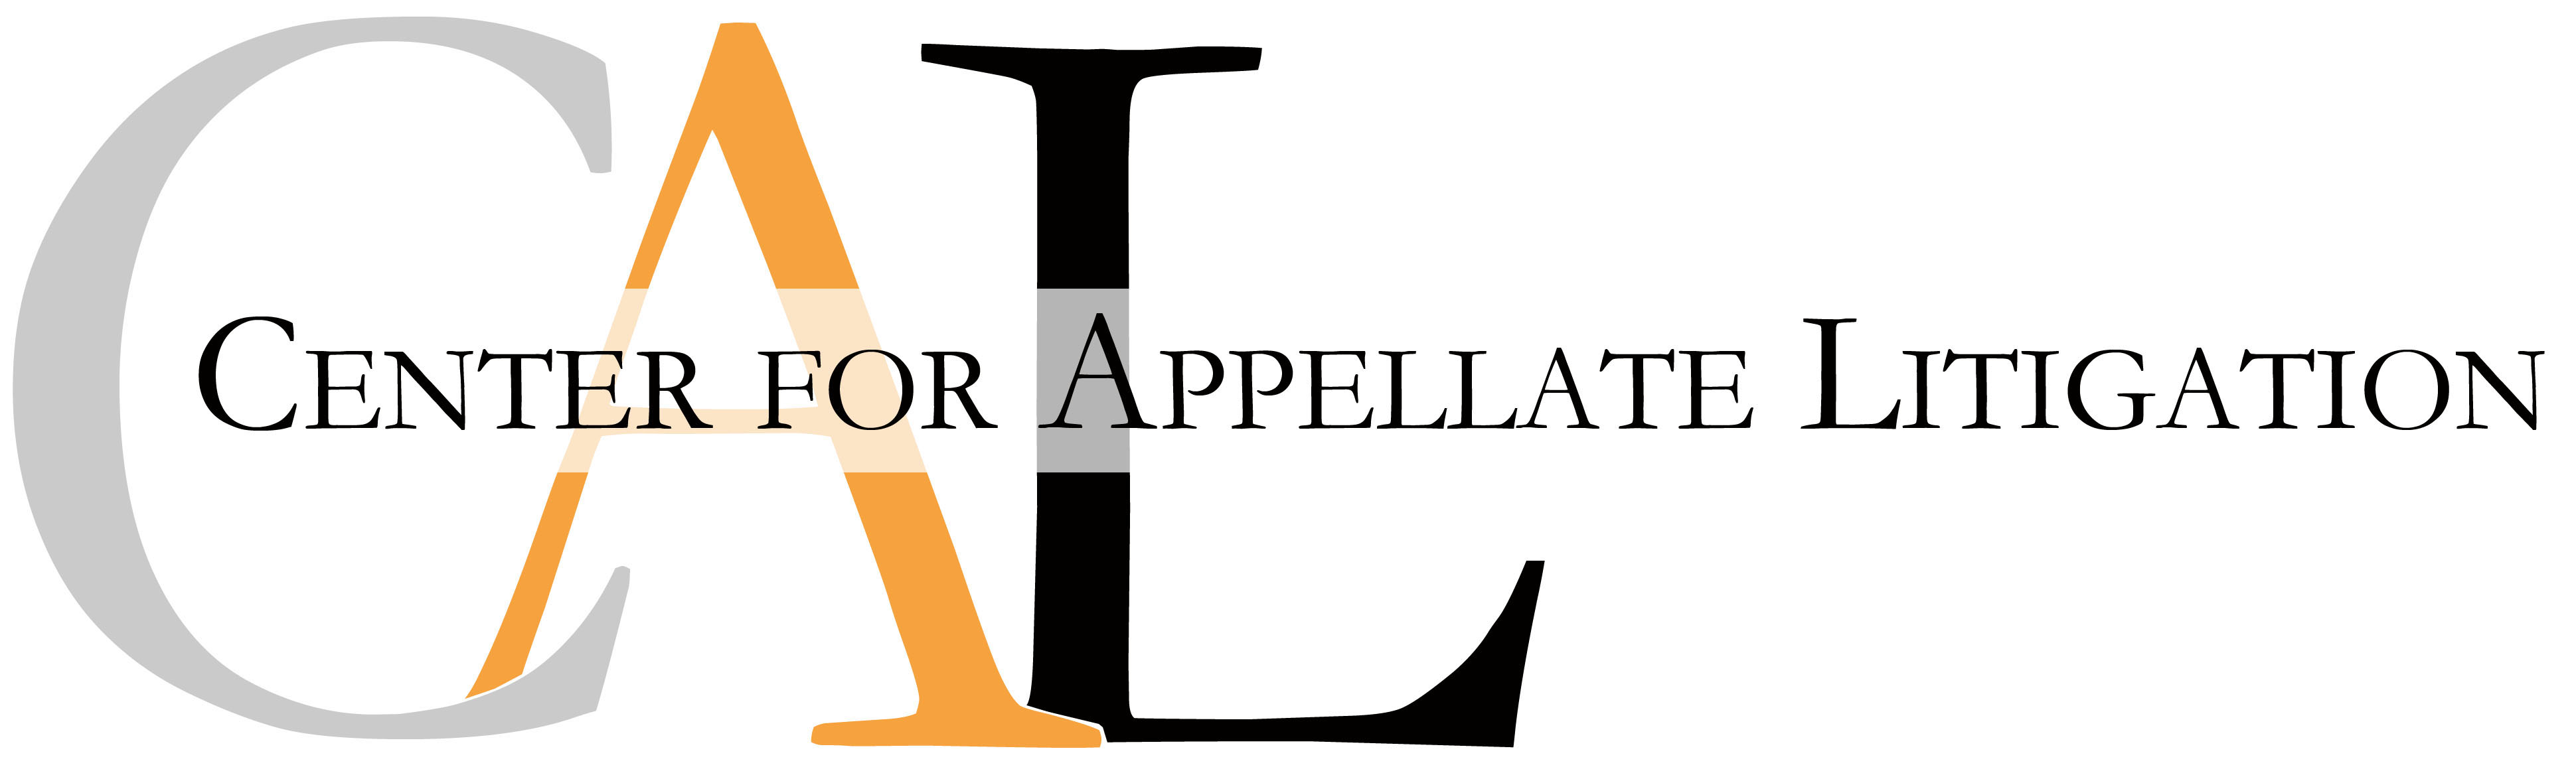 Center For Appellate Litigation